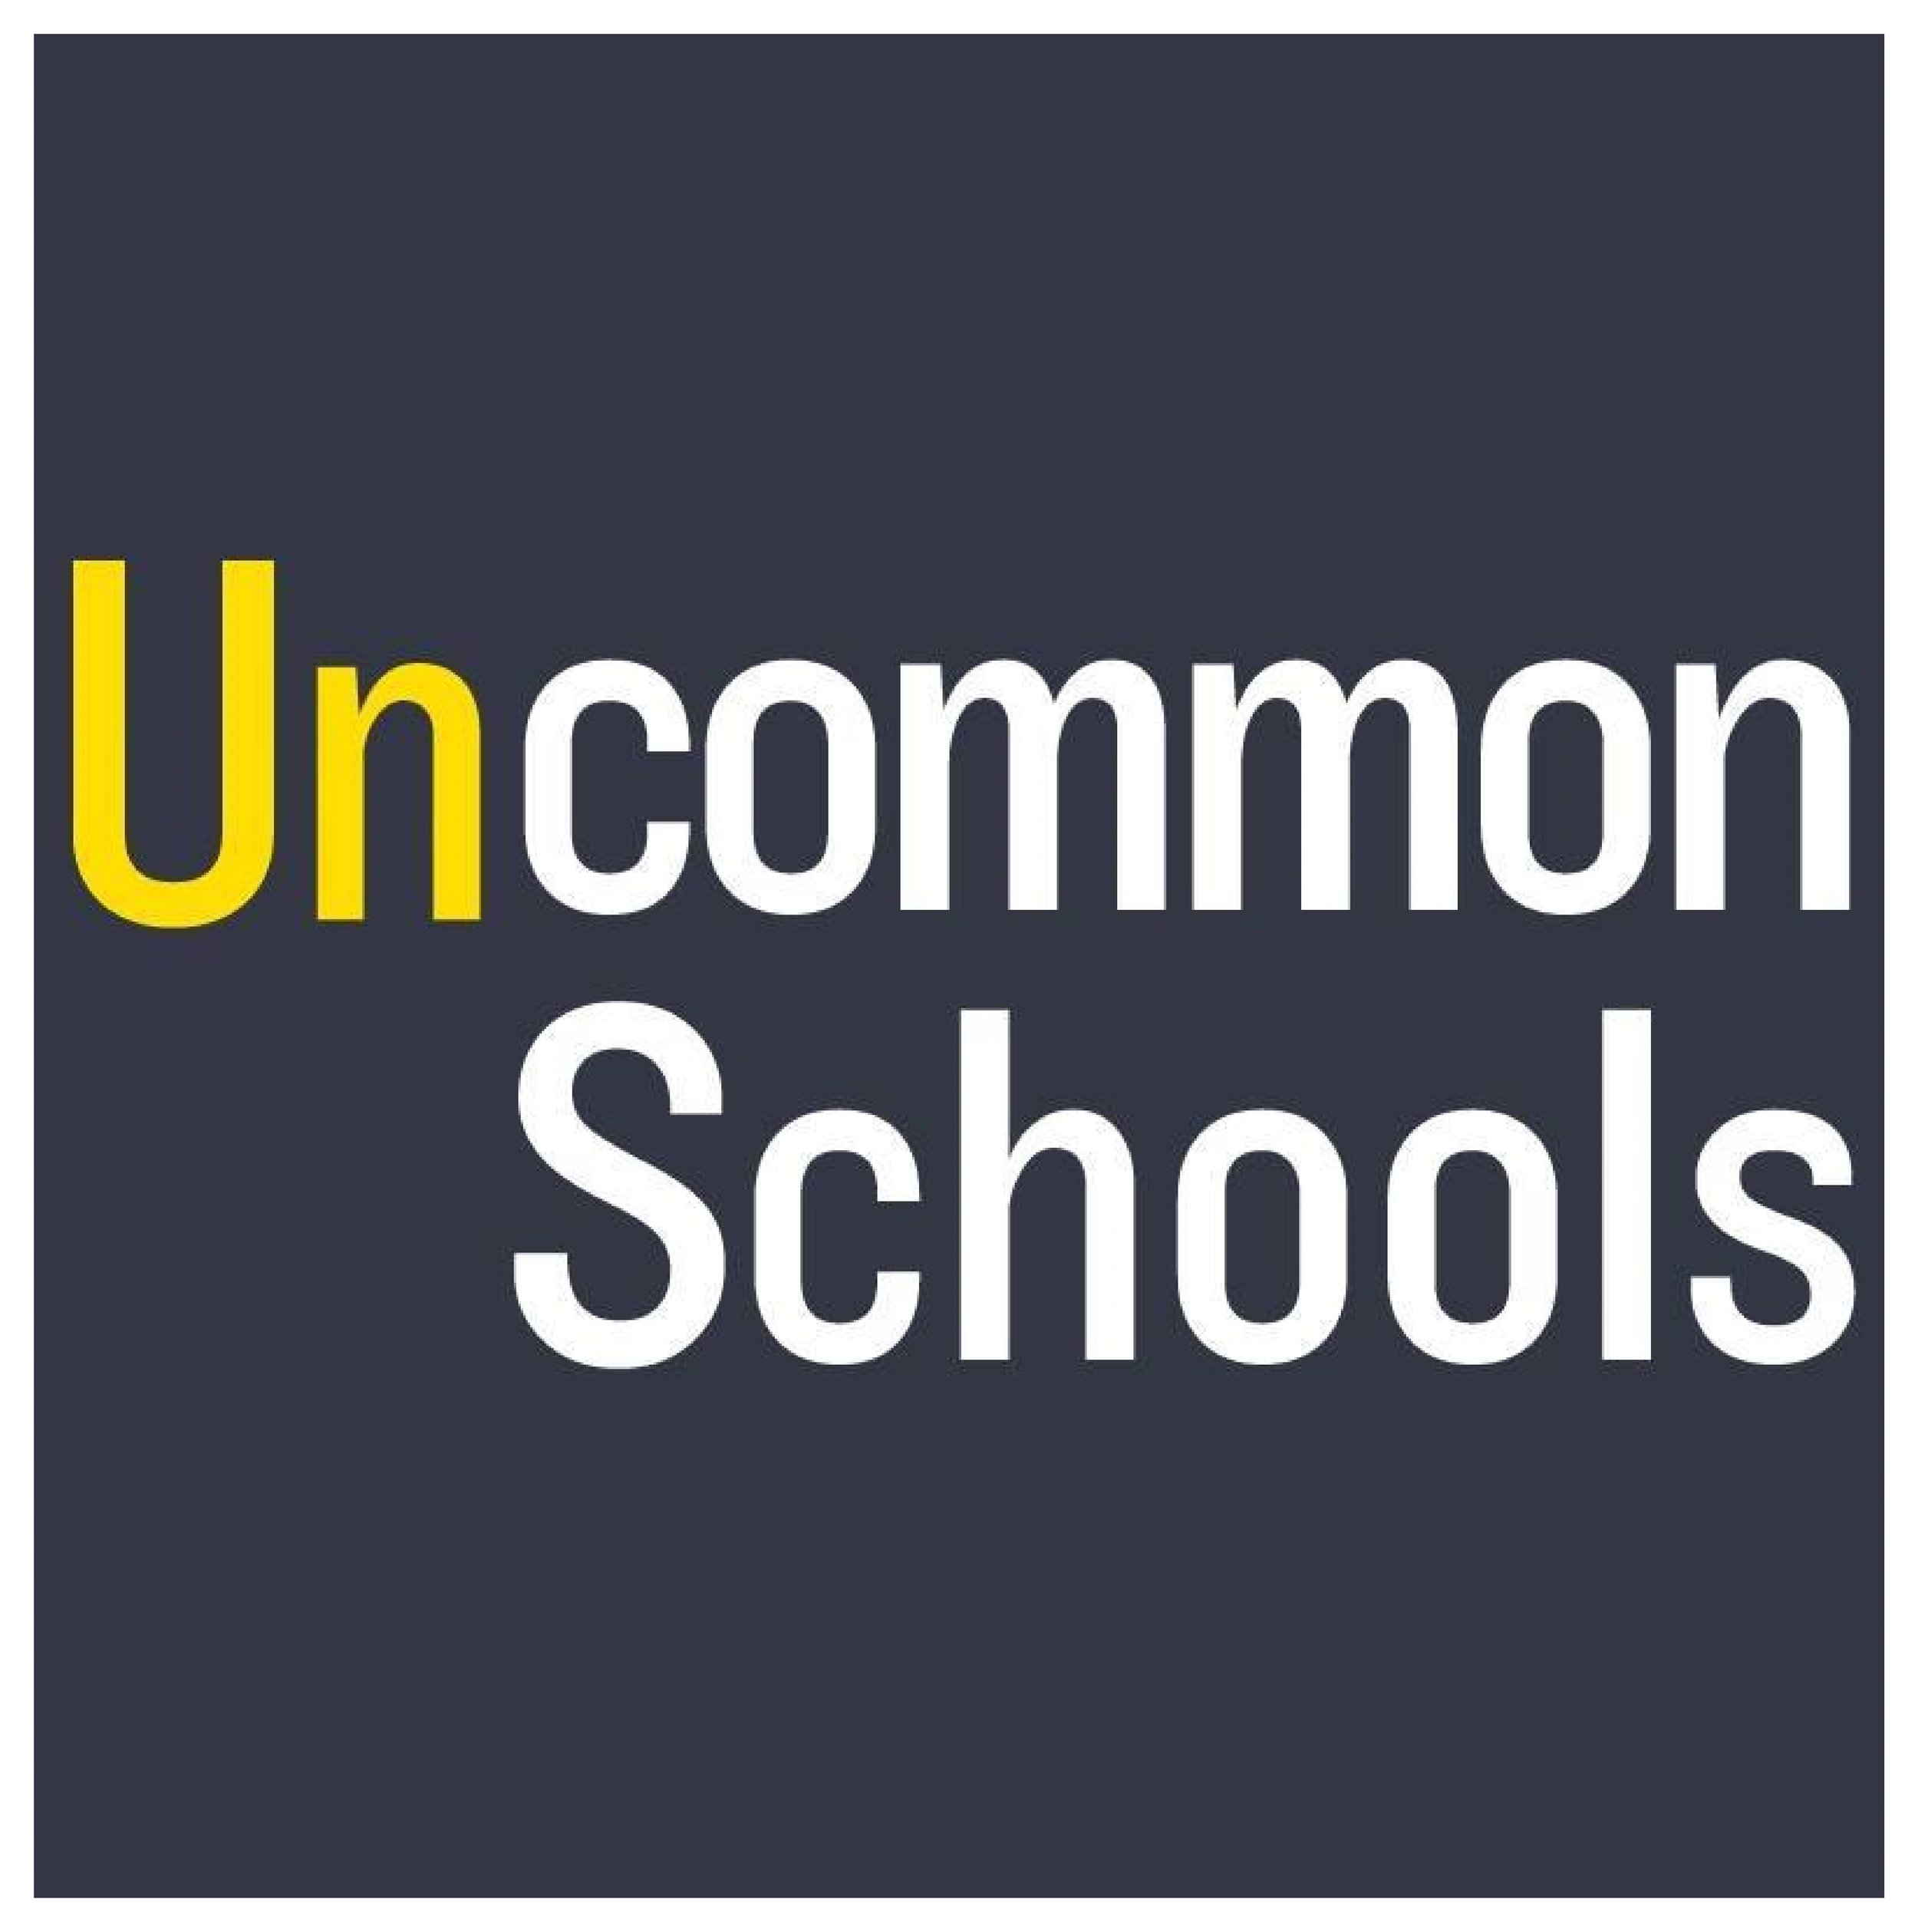 4.2 Uncommon Schools_cropped.jpg